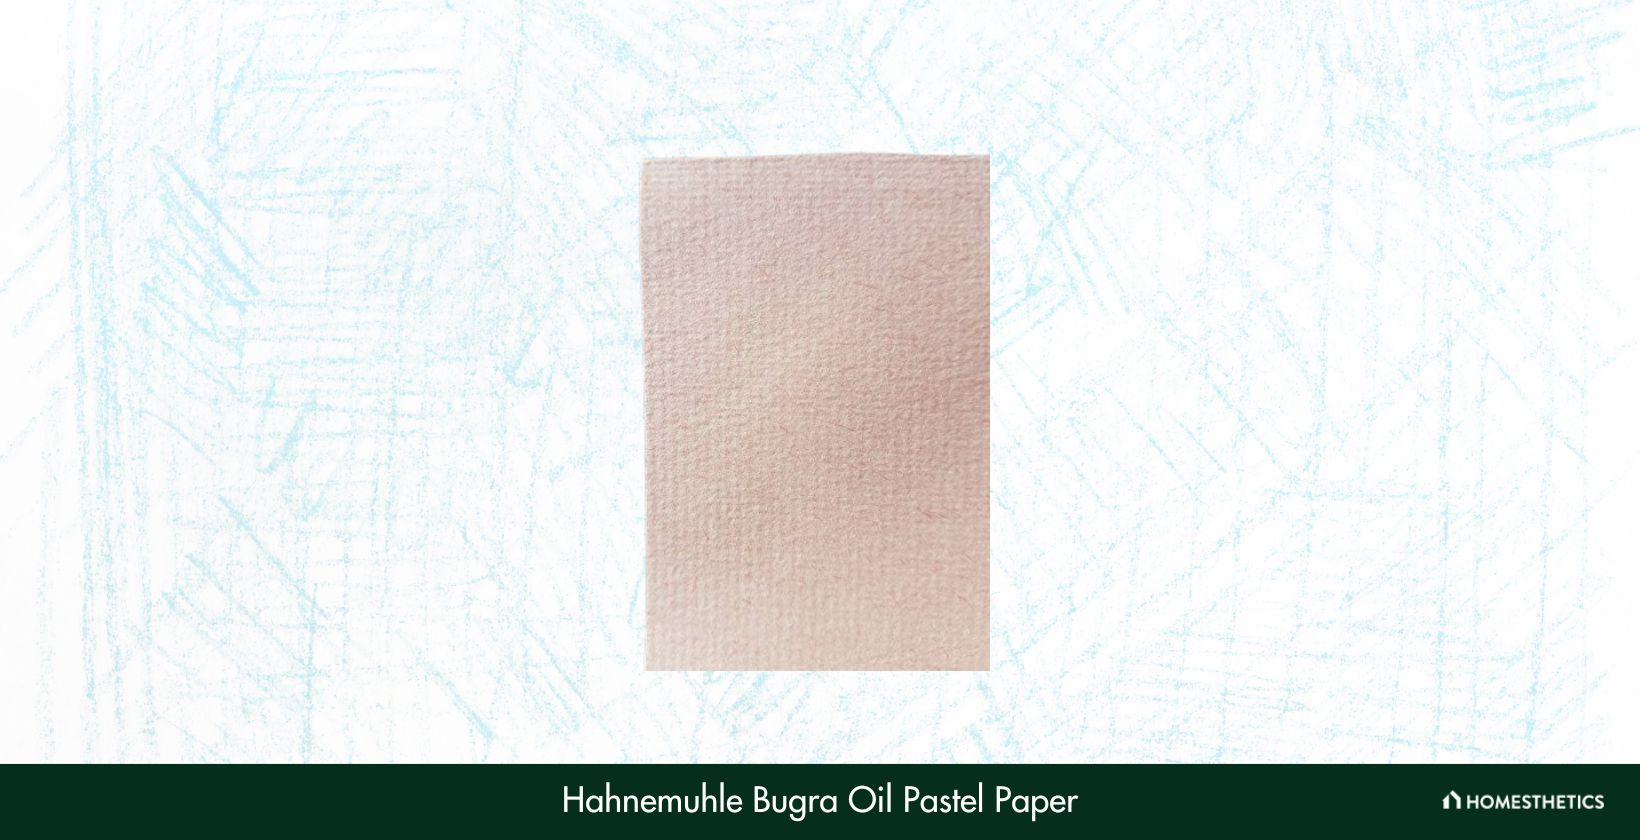 Hahnemuhle Bugra Oil Pastel Paper